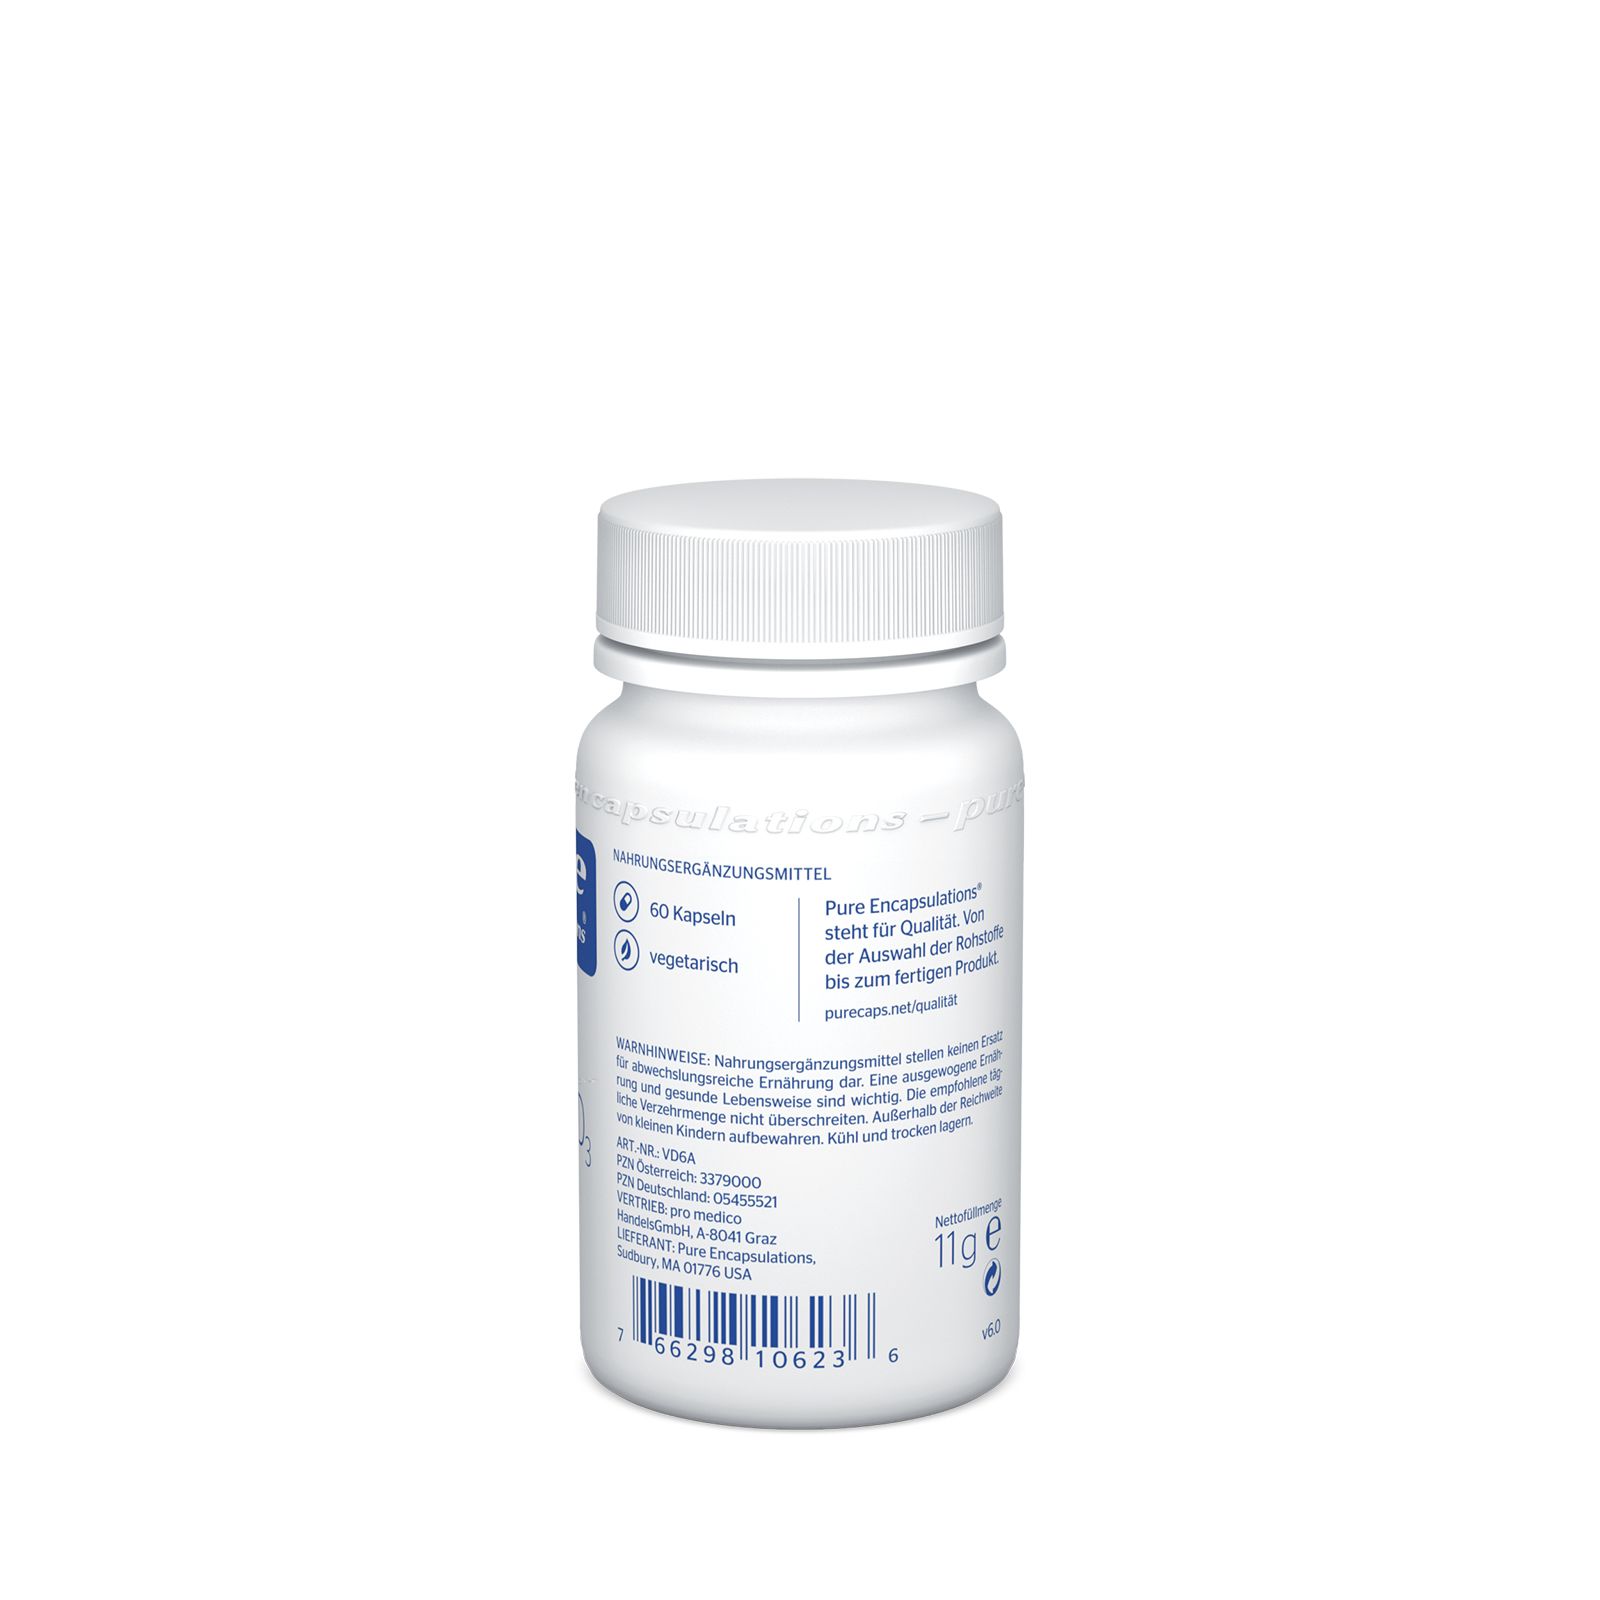 Pure Encapsulations® Vitamin D3 400 I.E.